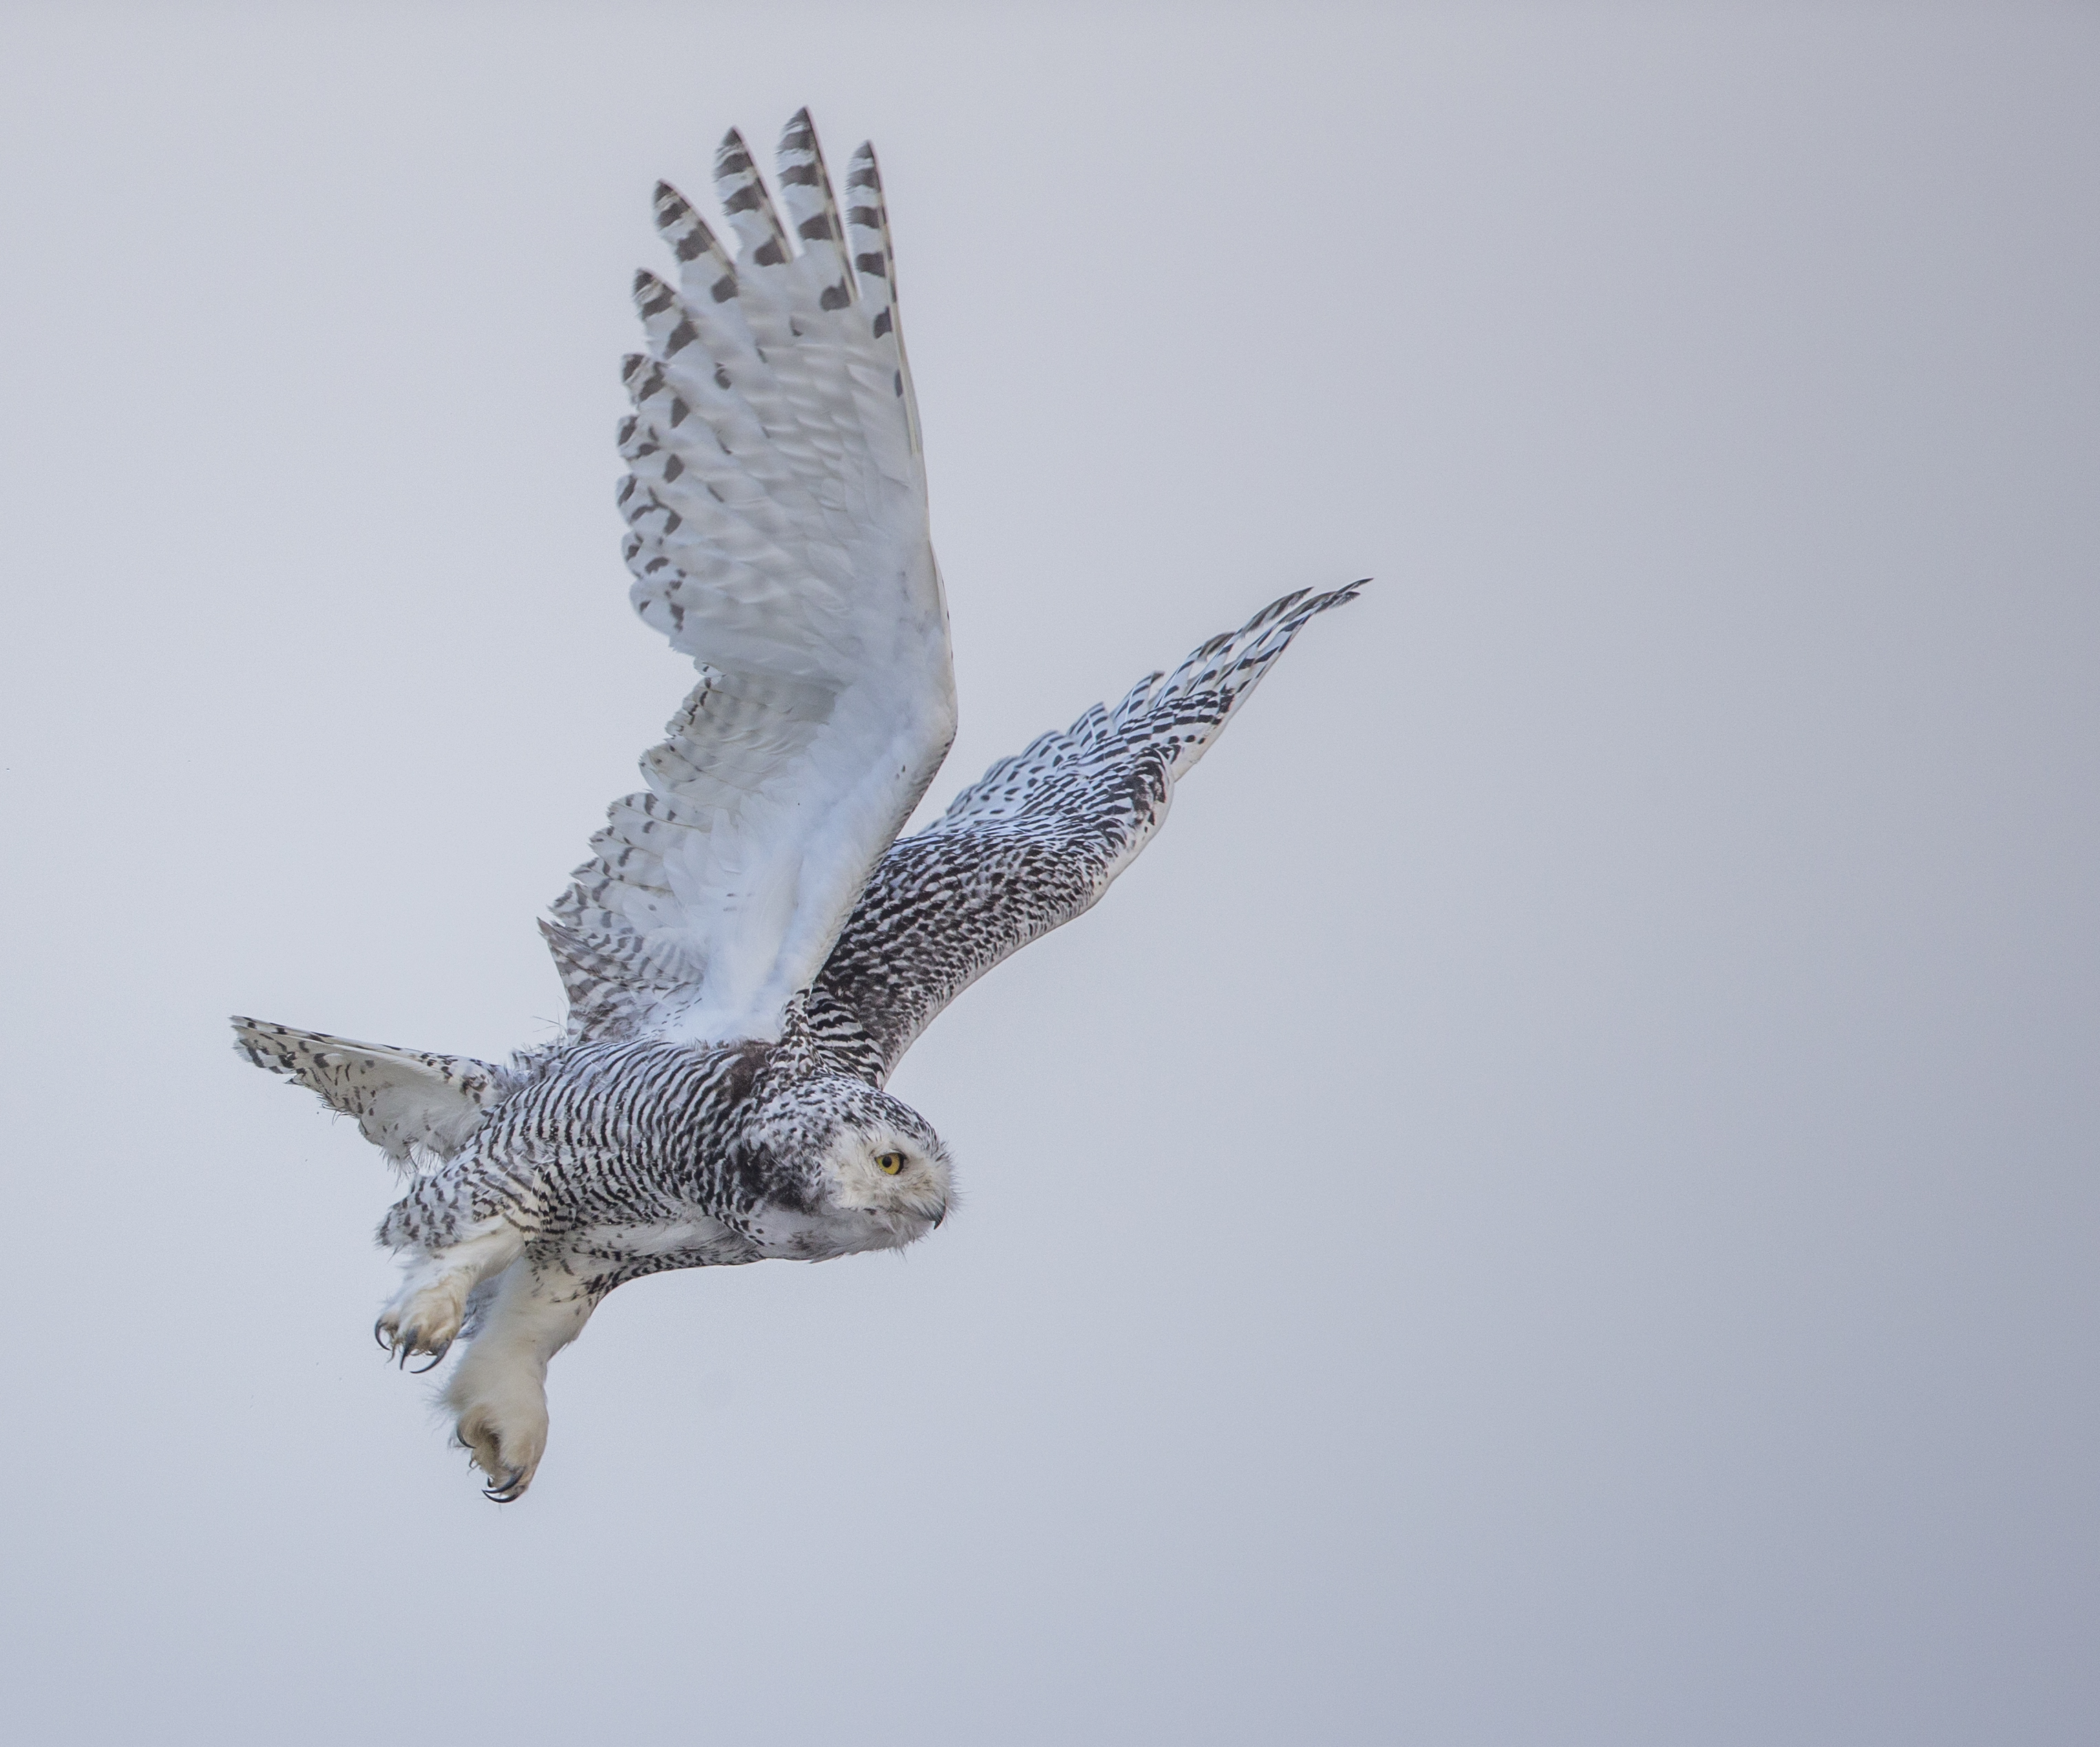 snowy owl with blue eyes flying